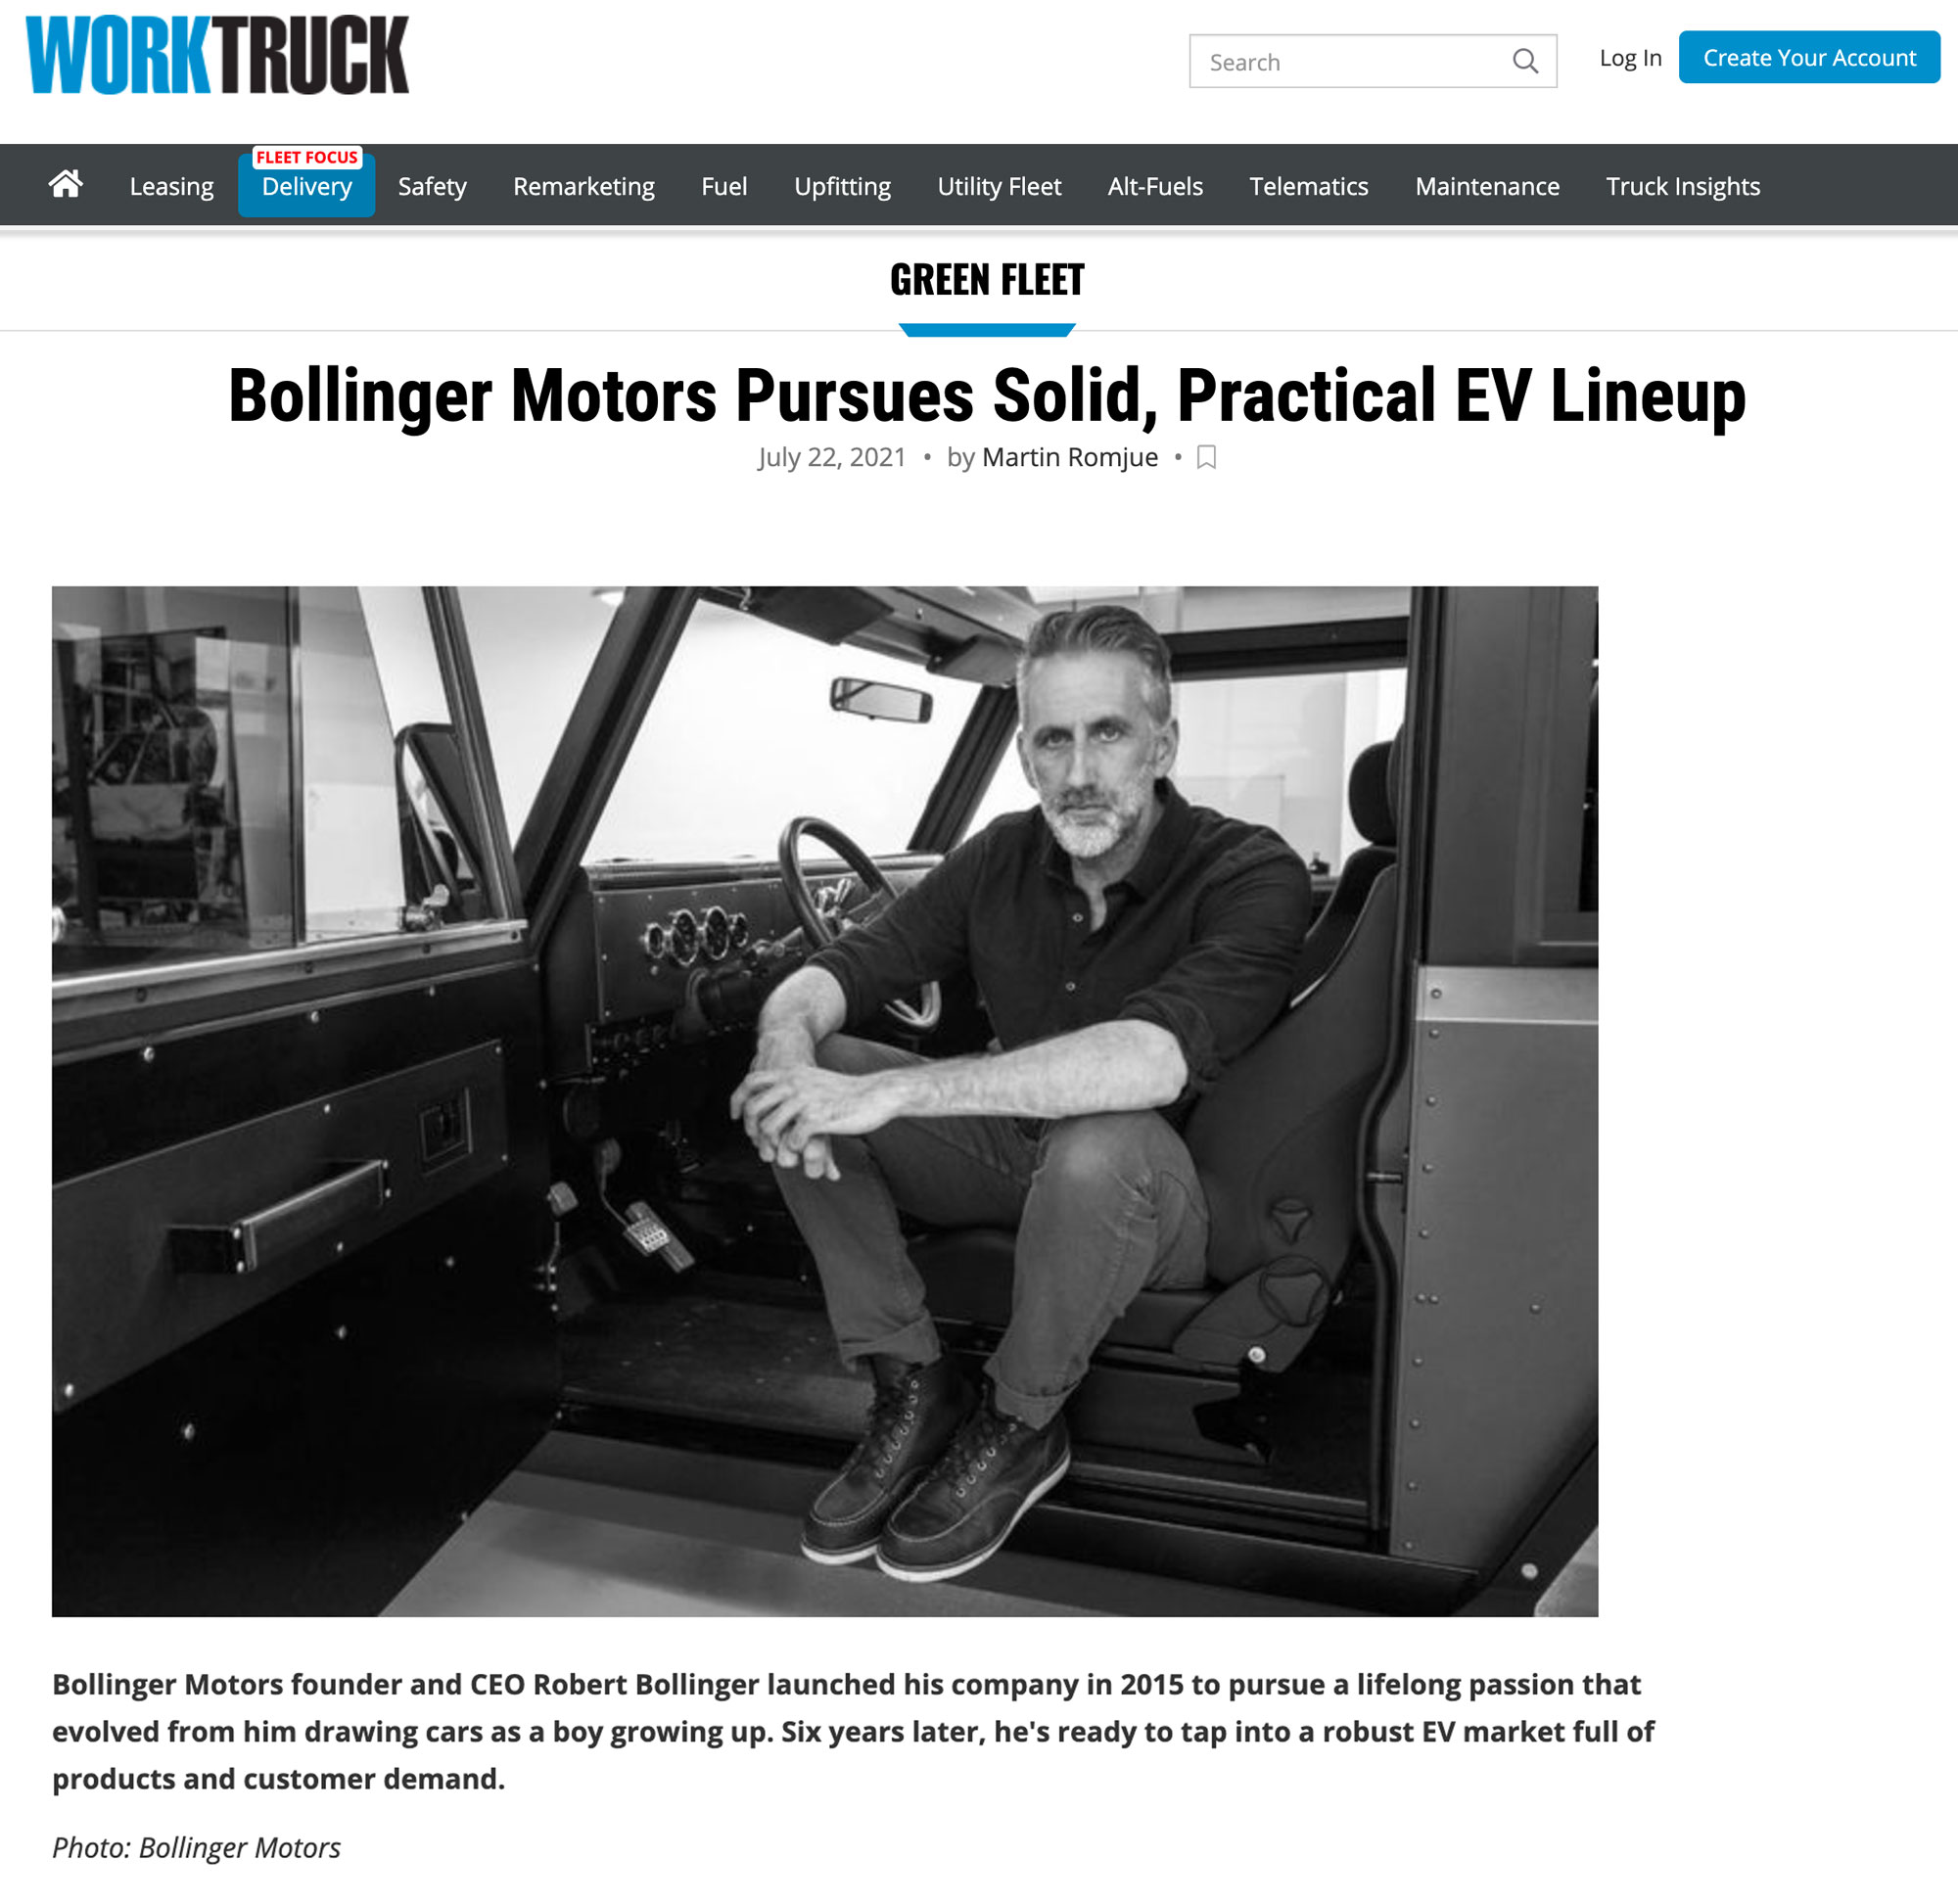 WORK TRUCK / GREEN FLEET: Bollinger Motors Pursues Solid, Practical EV Lineup